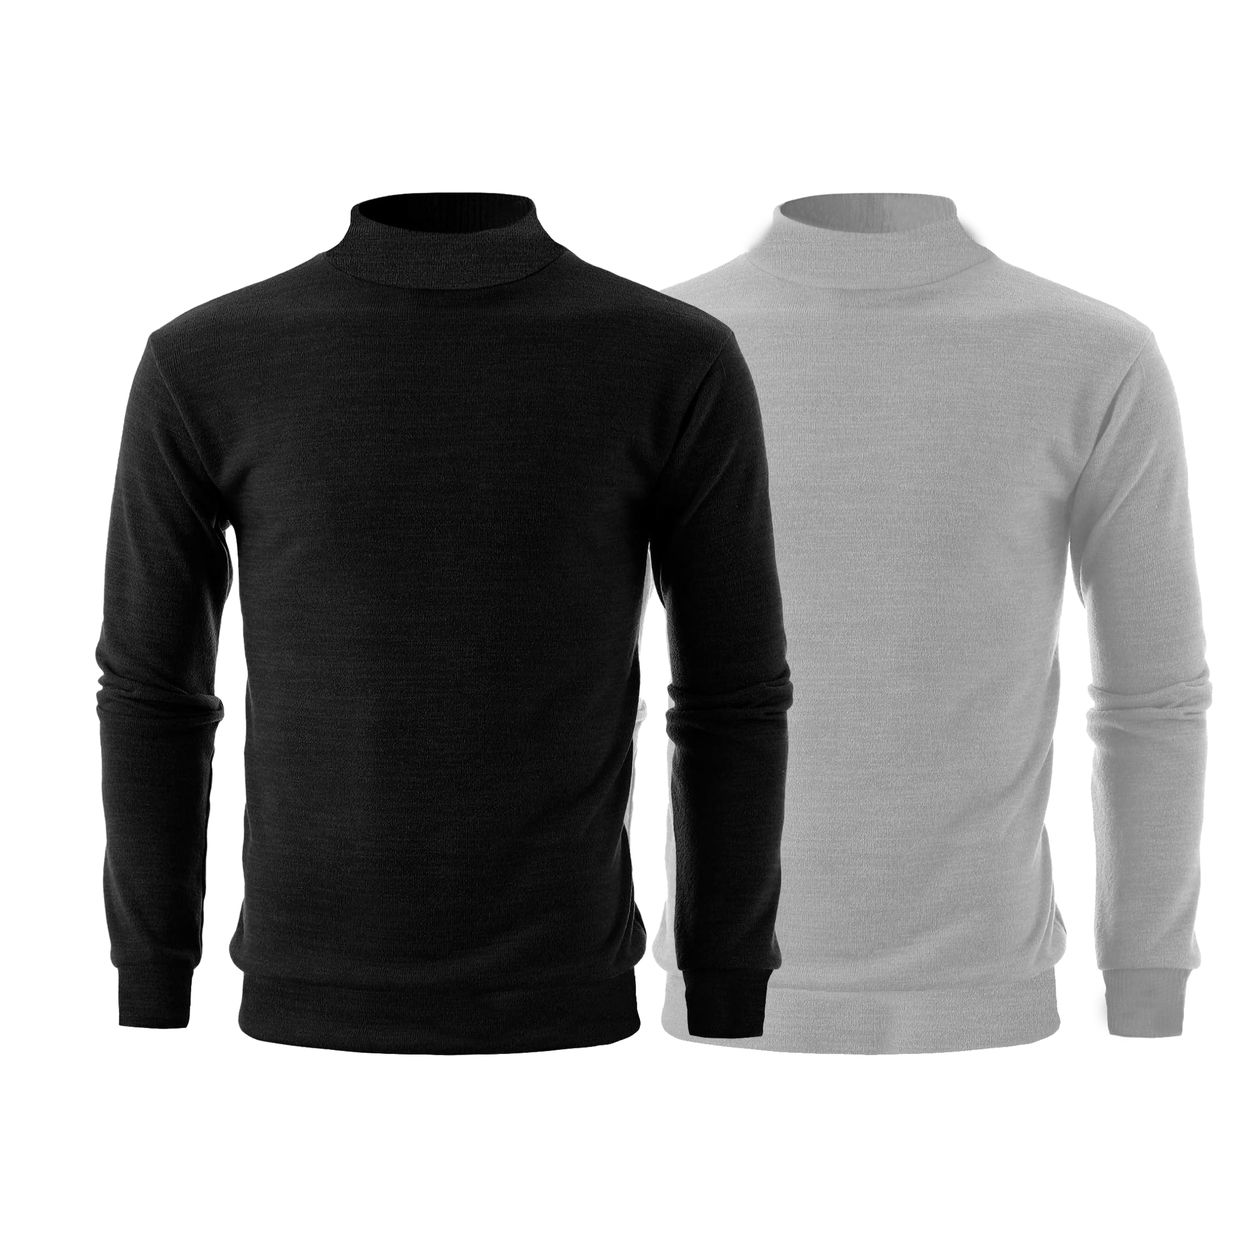 2-Pack: Men's Winter Warm Cozy Knit Slim Fit Mock Neck Sweater - Black & Black, Xx-large